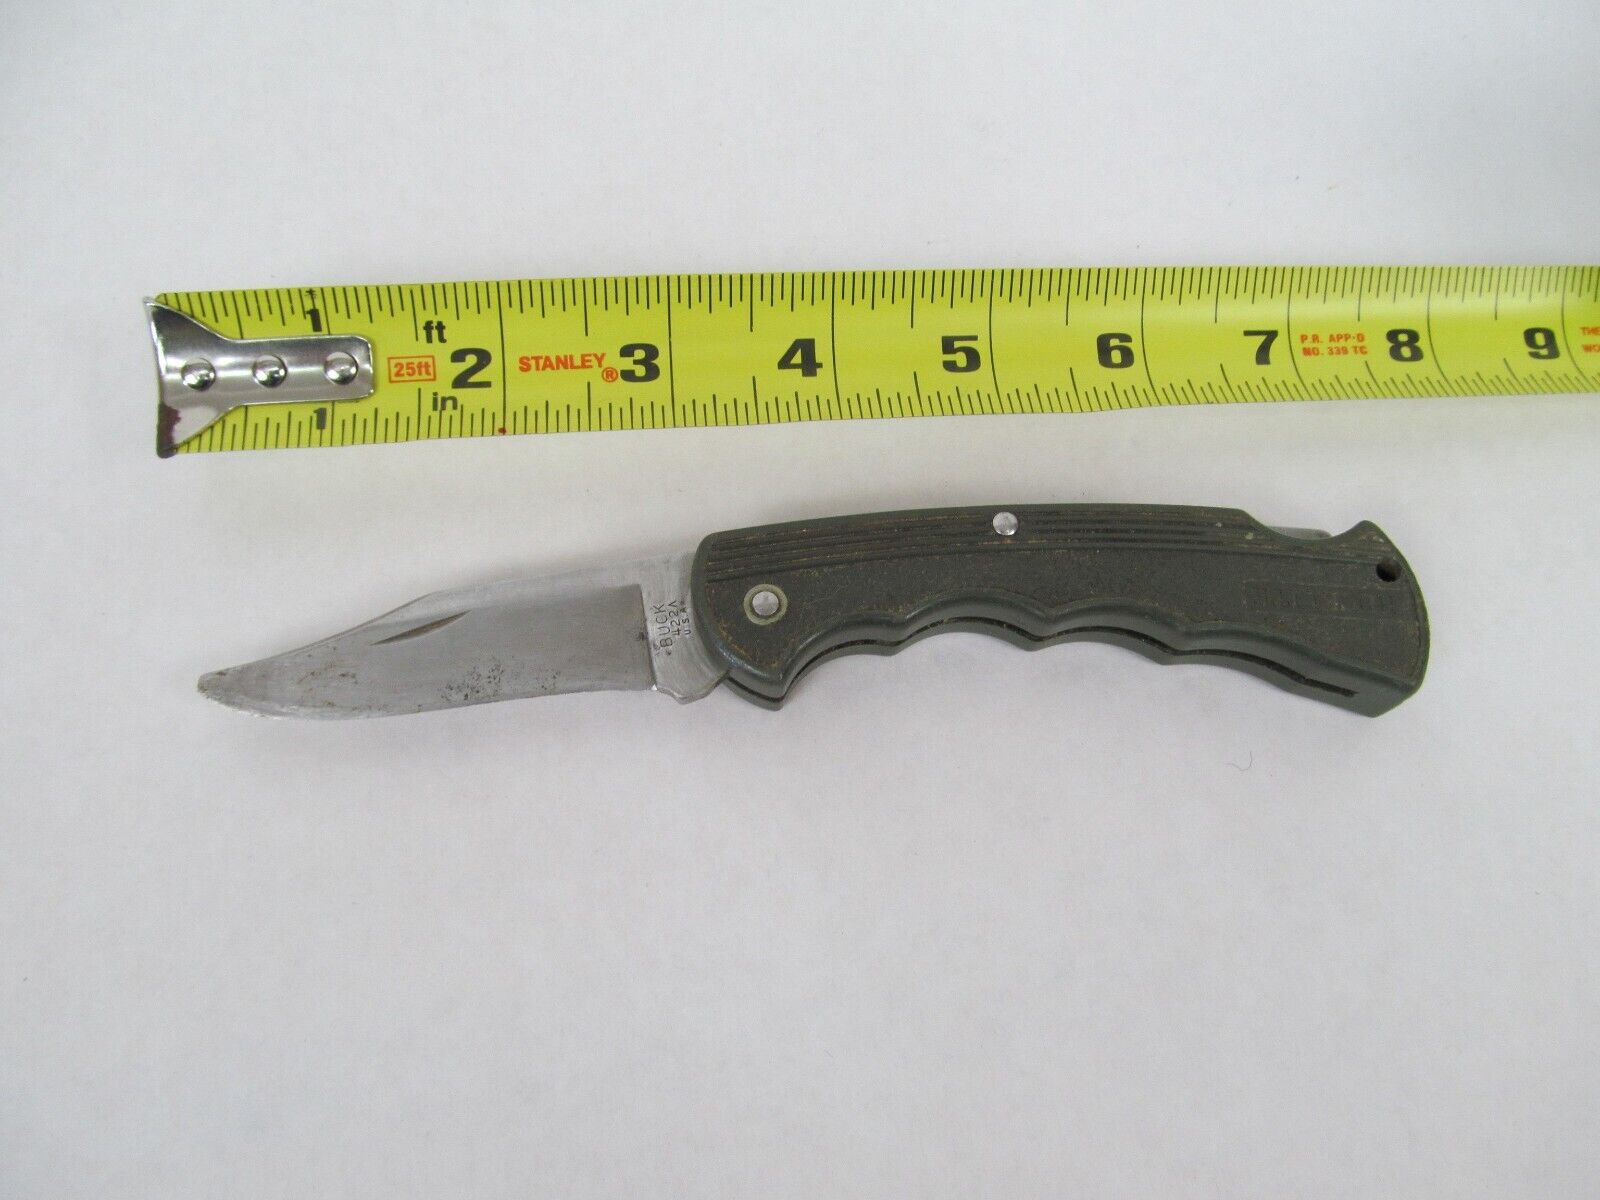 Buck Lite 422 A Lockback Single Blade Folding Pocket Knife